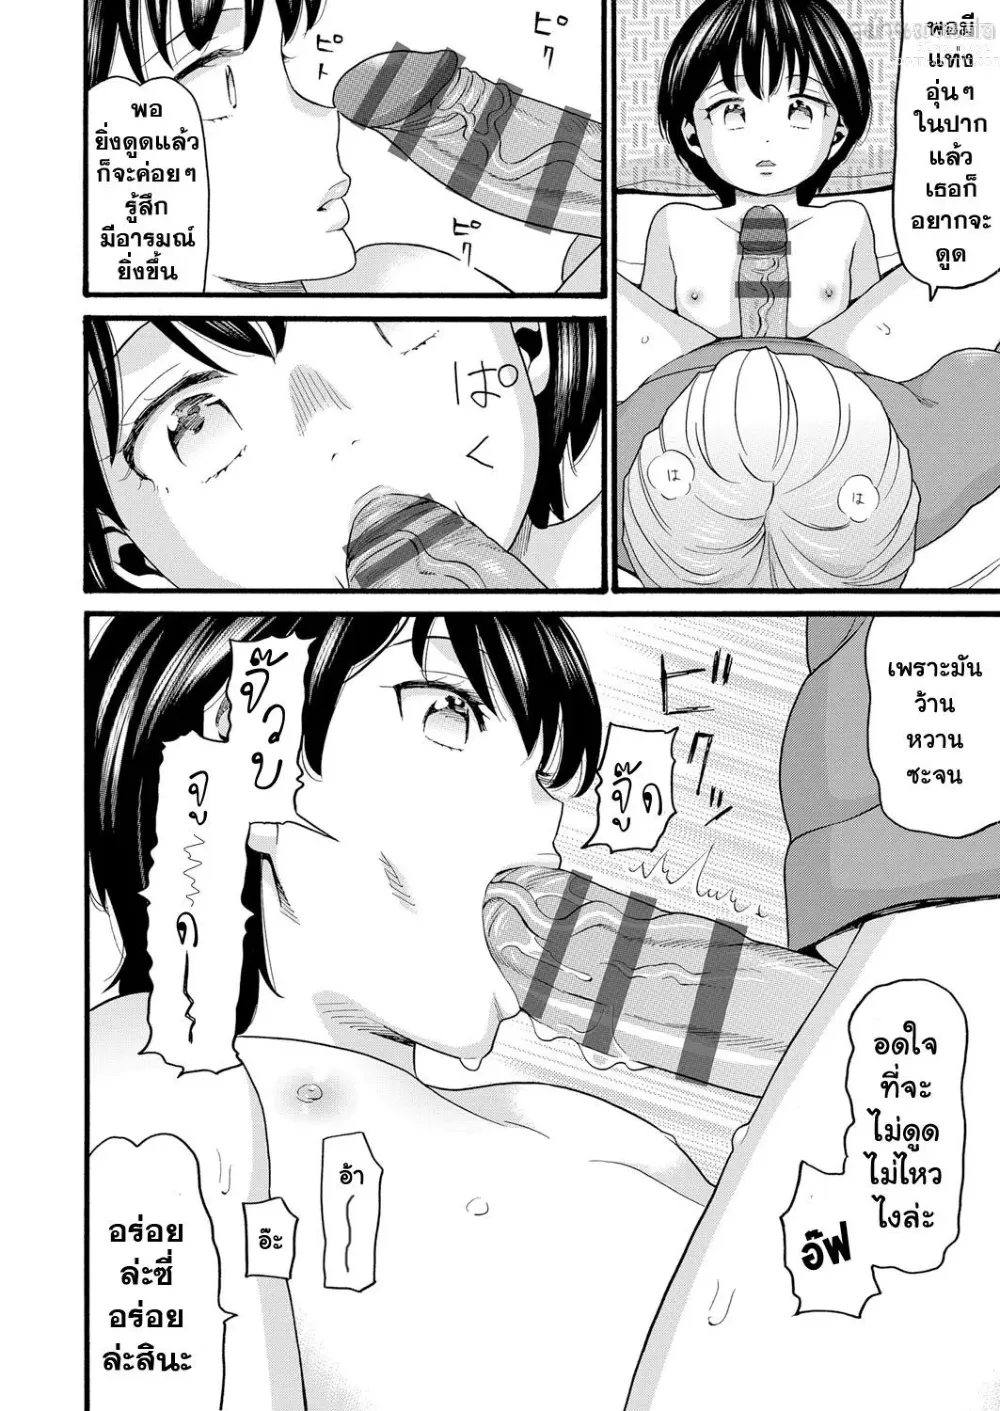 Page 11 of manga Yurui Ko